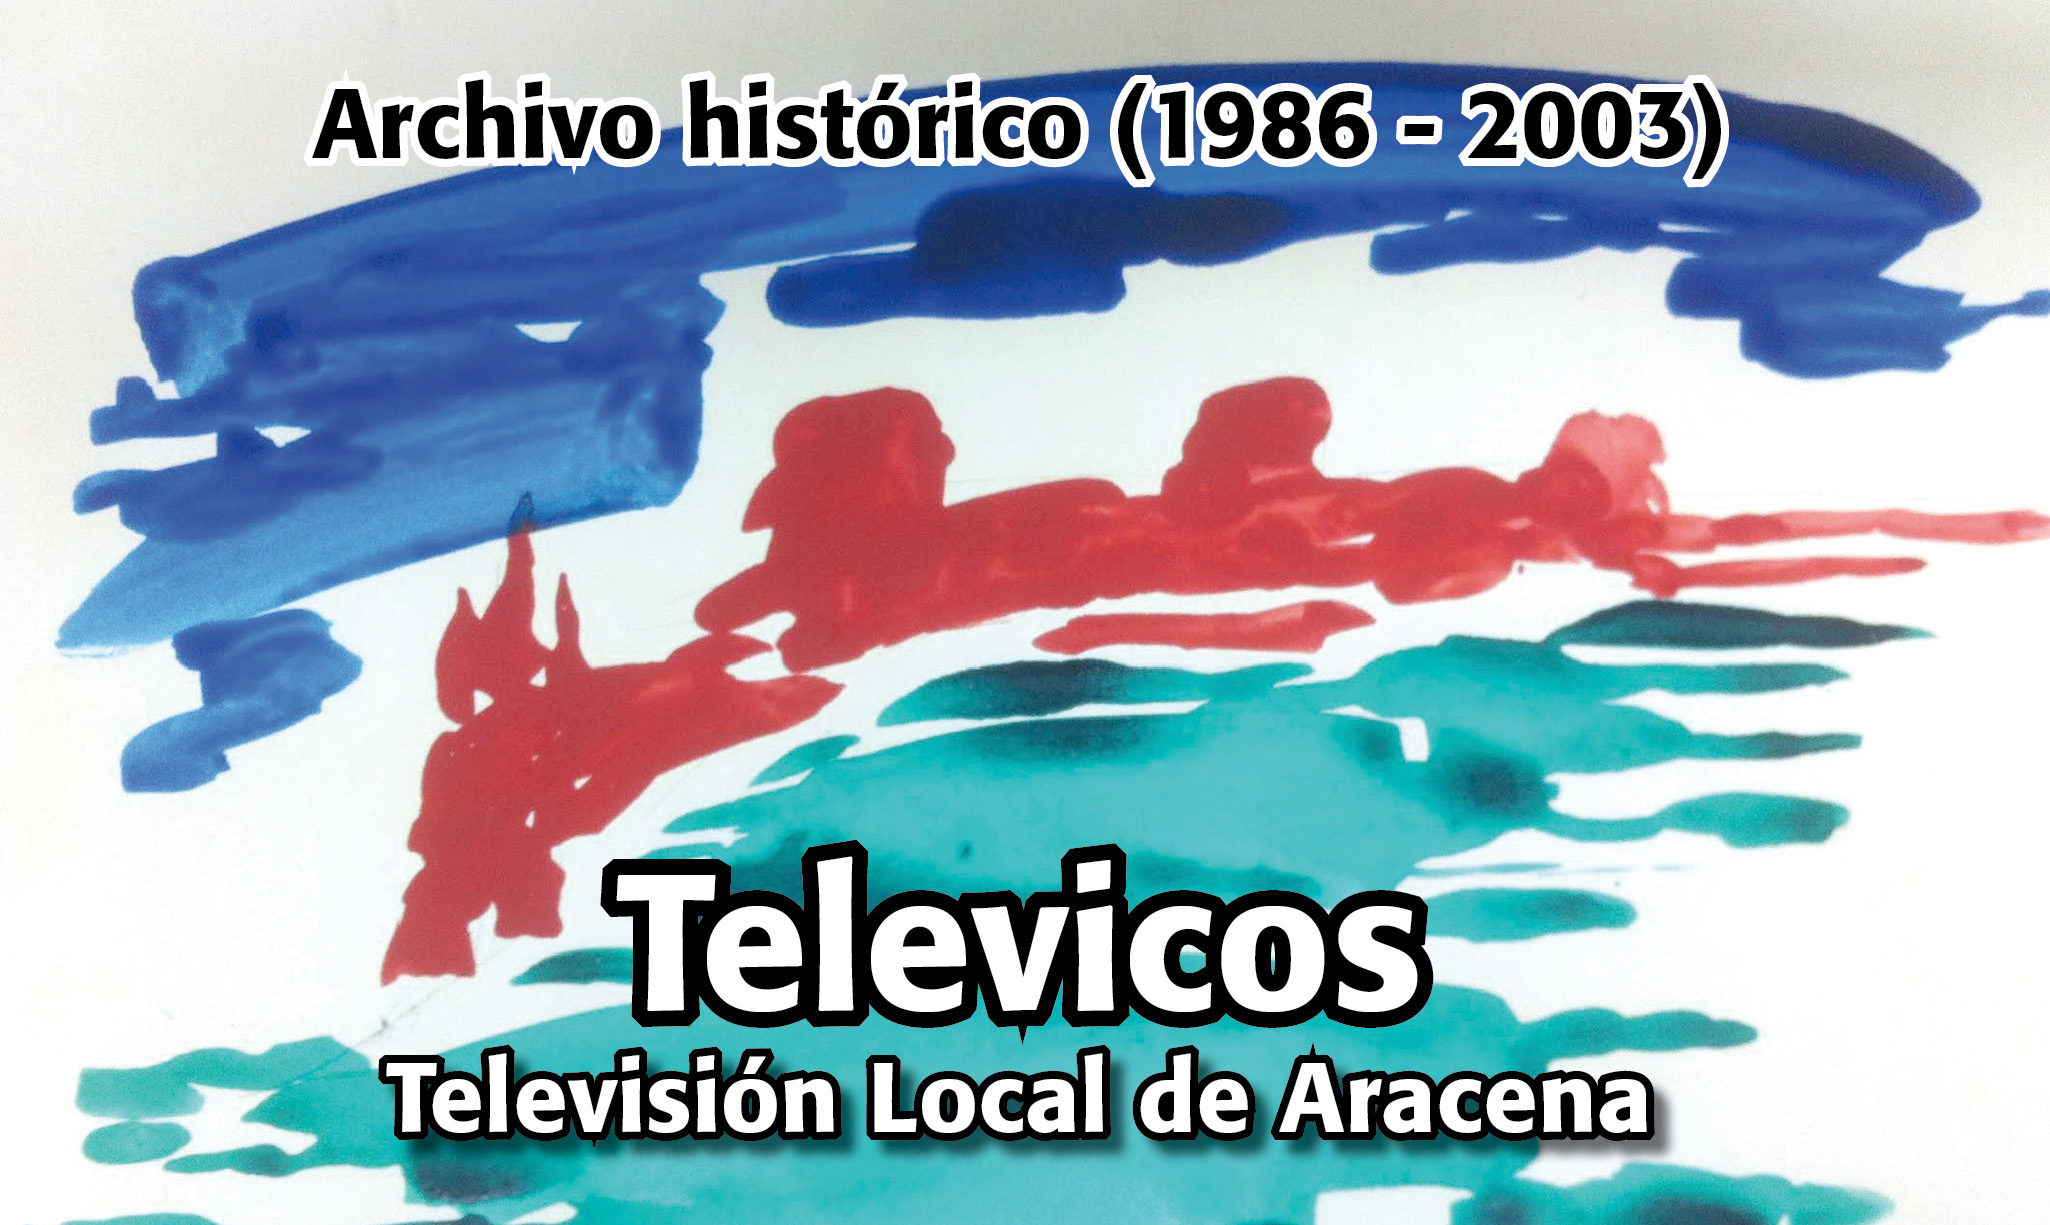 Televicos Aracena